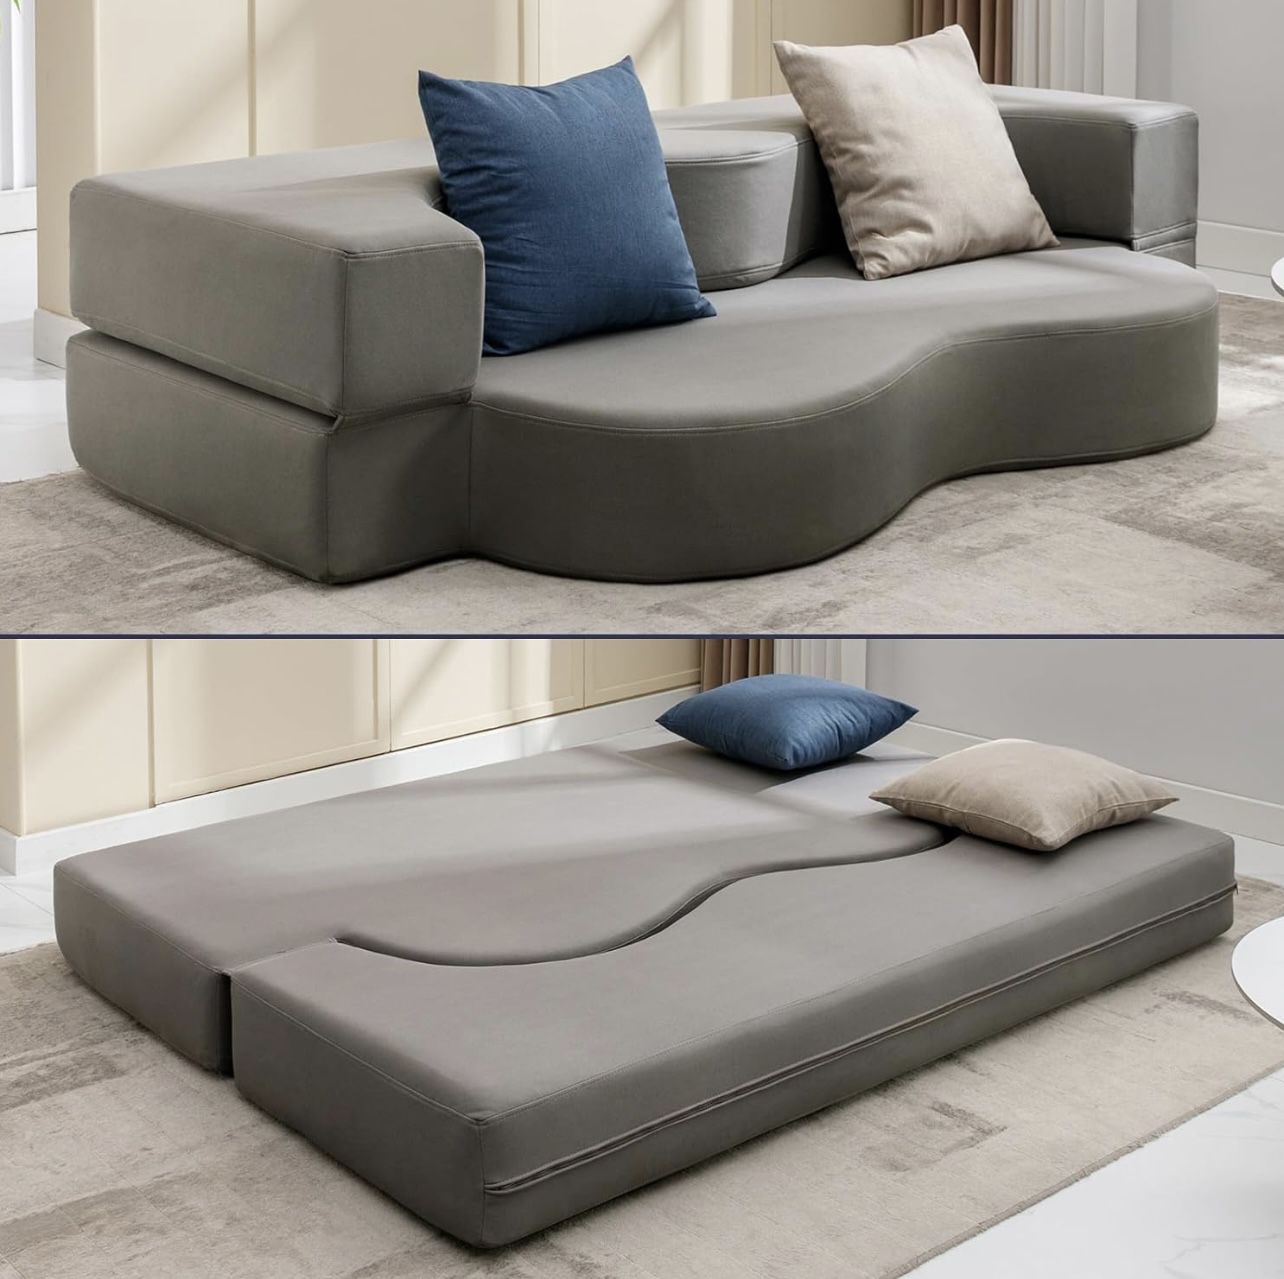 Queen Size Convertible Floor Sofa Bed, Futon Sofa Bed Foldable, Foam Folding Mattress Sleeper